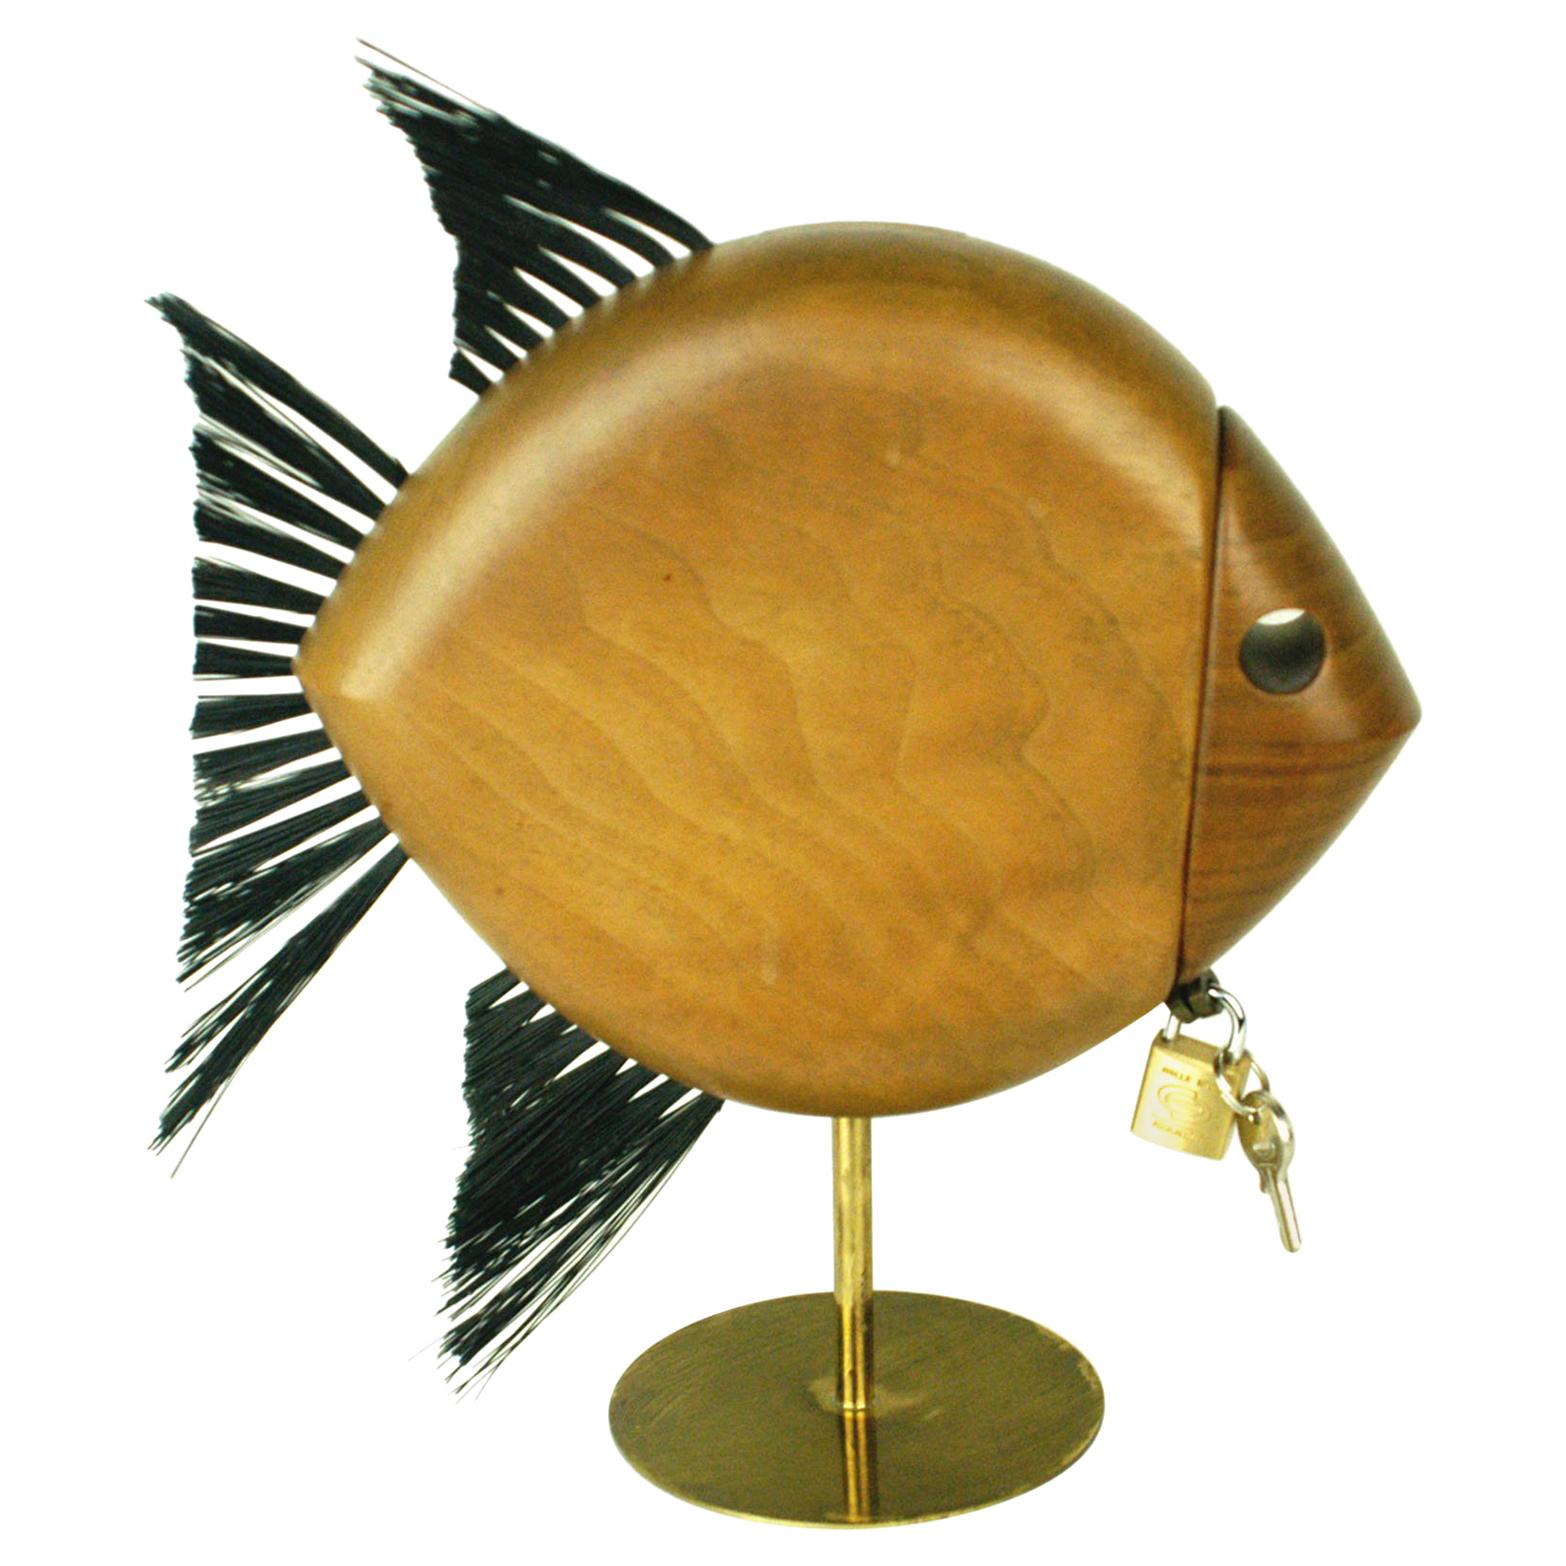 Austrian Modernist Walnut and Brass Fish Shaped Money Box by Carl Auböck